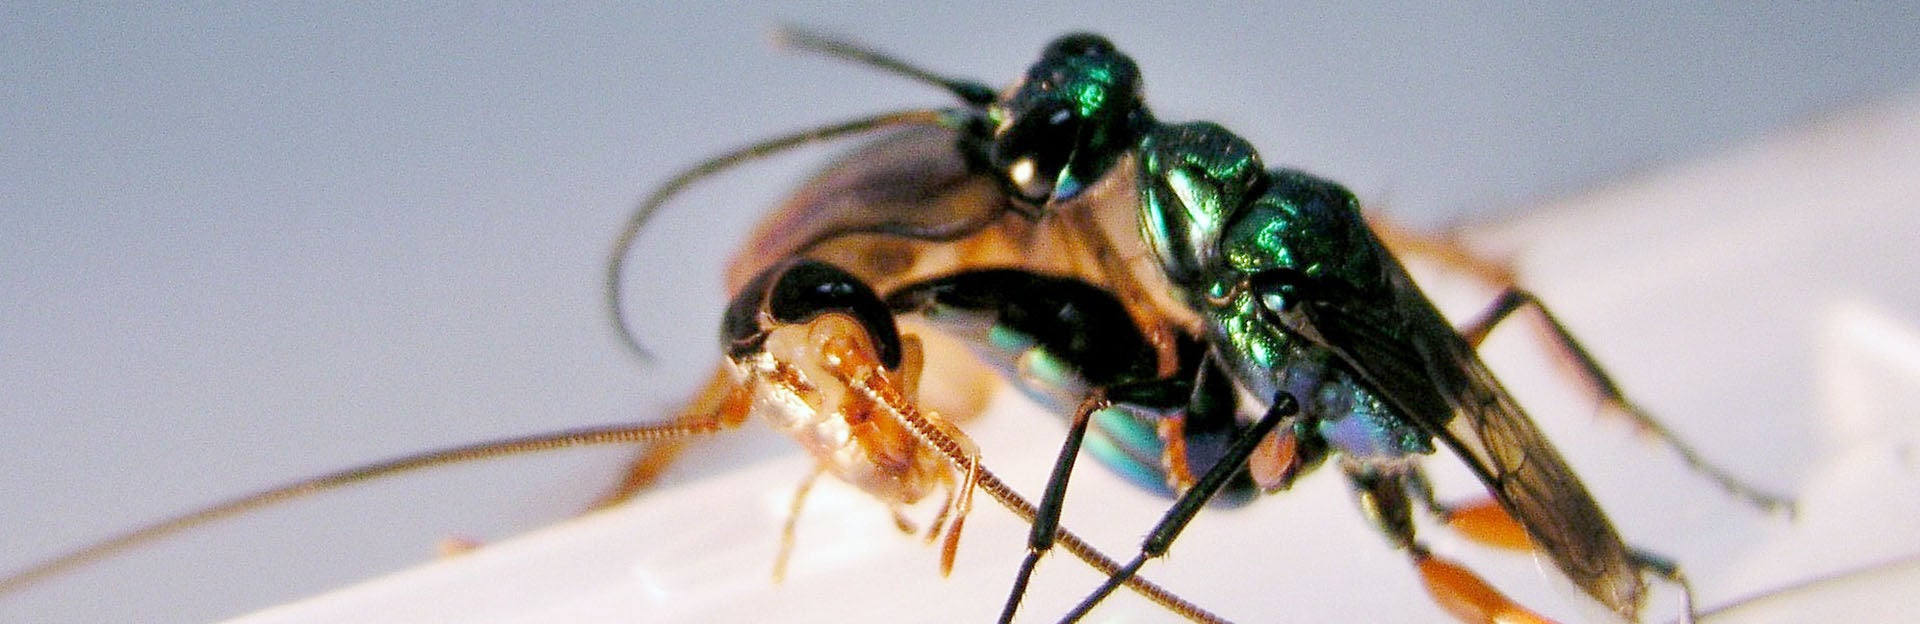 Jewel wasp (ampulex compressa)